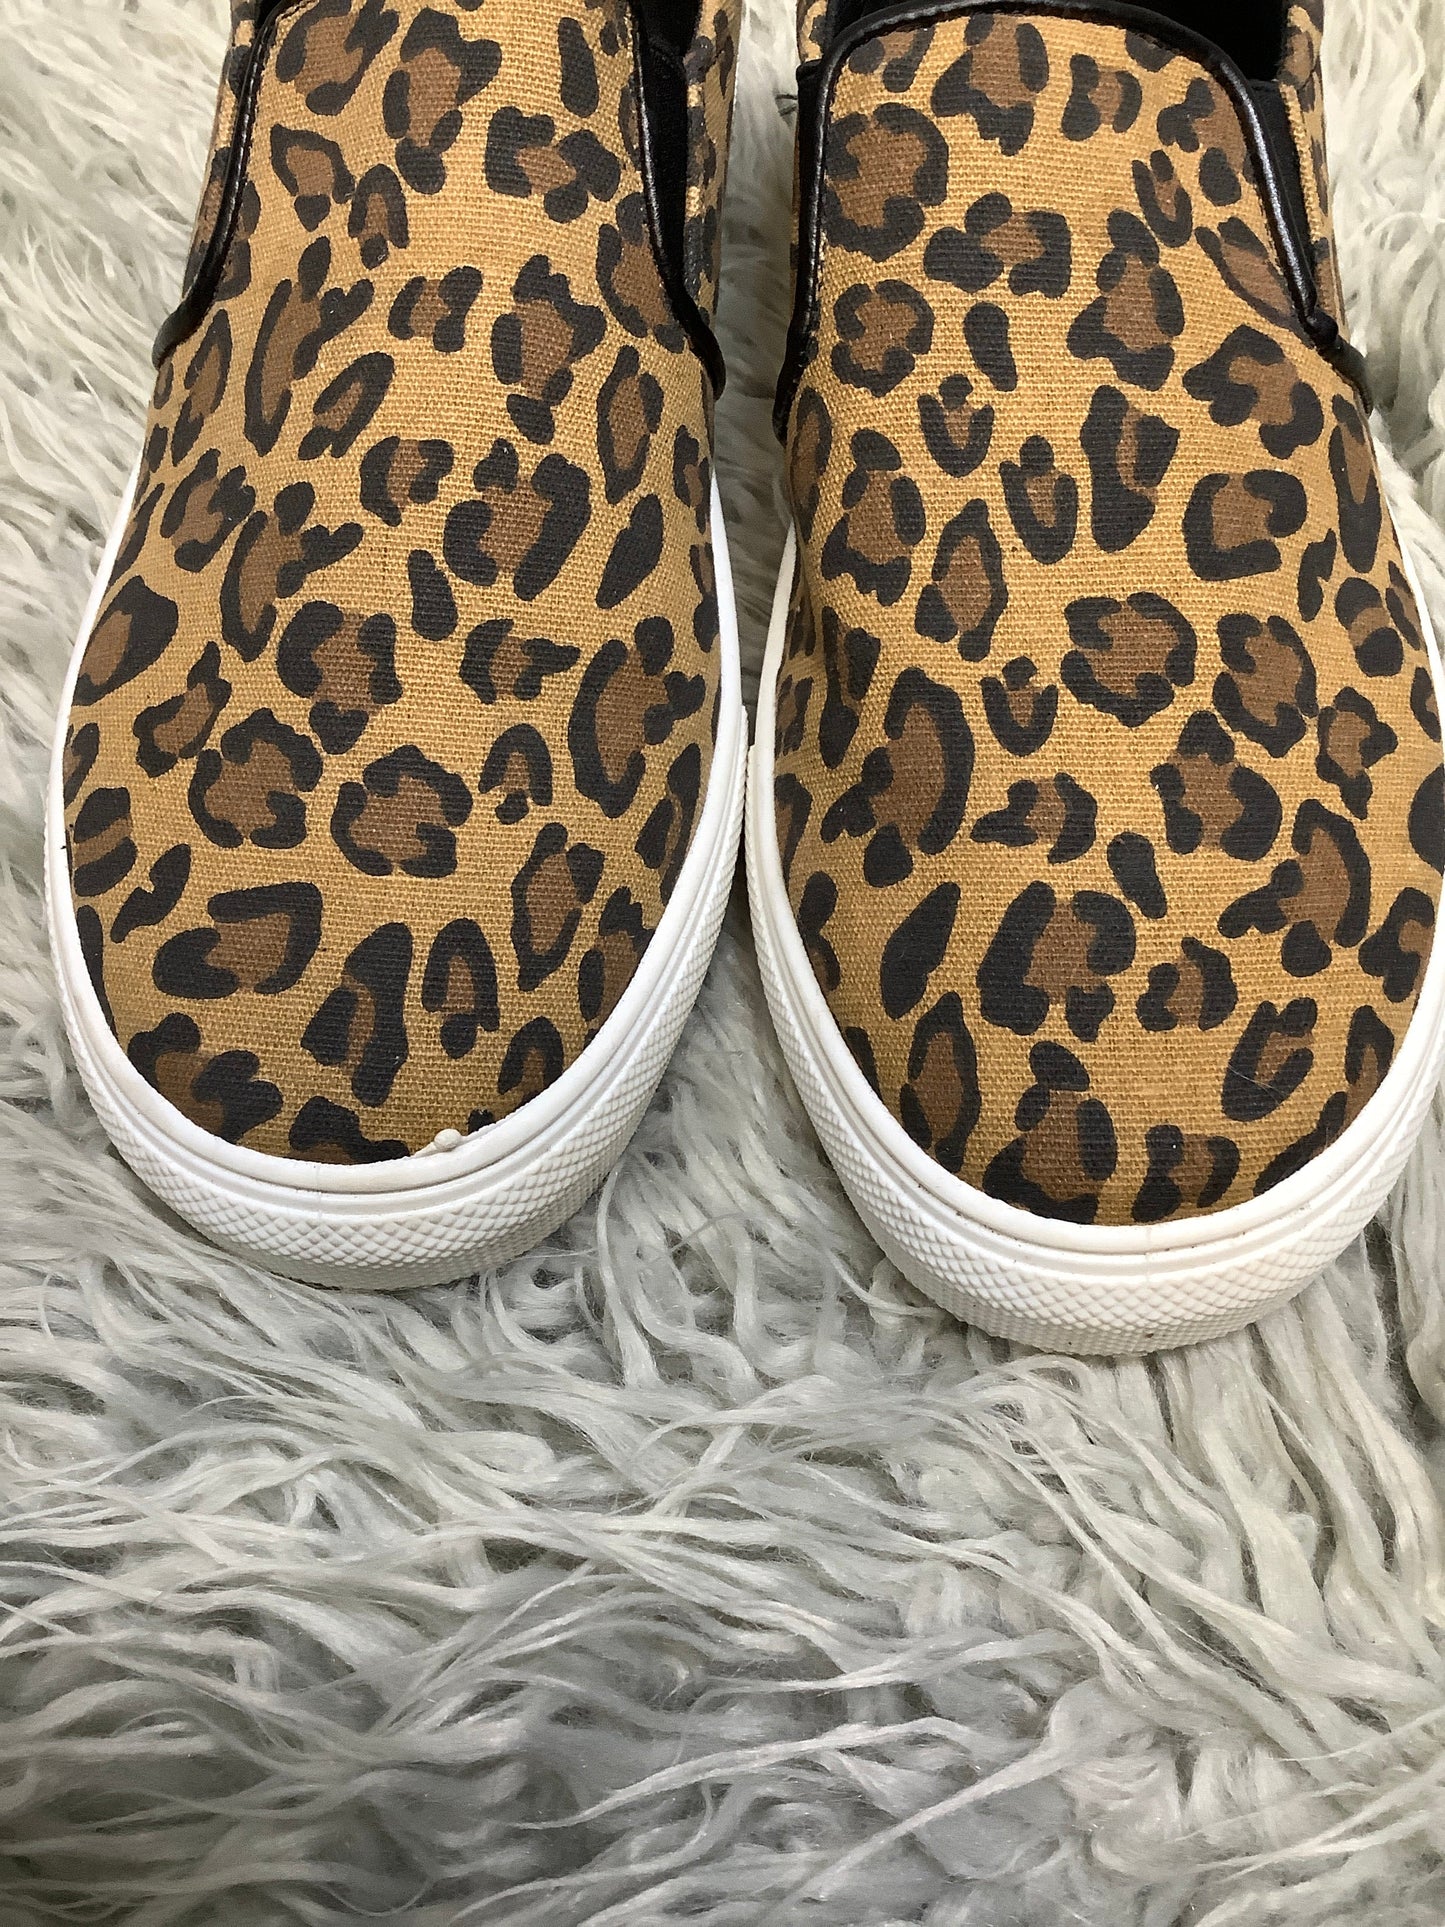 Animal Print Shoes Flats Serra, Size 8